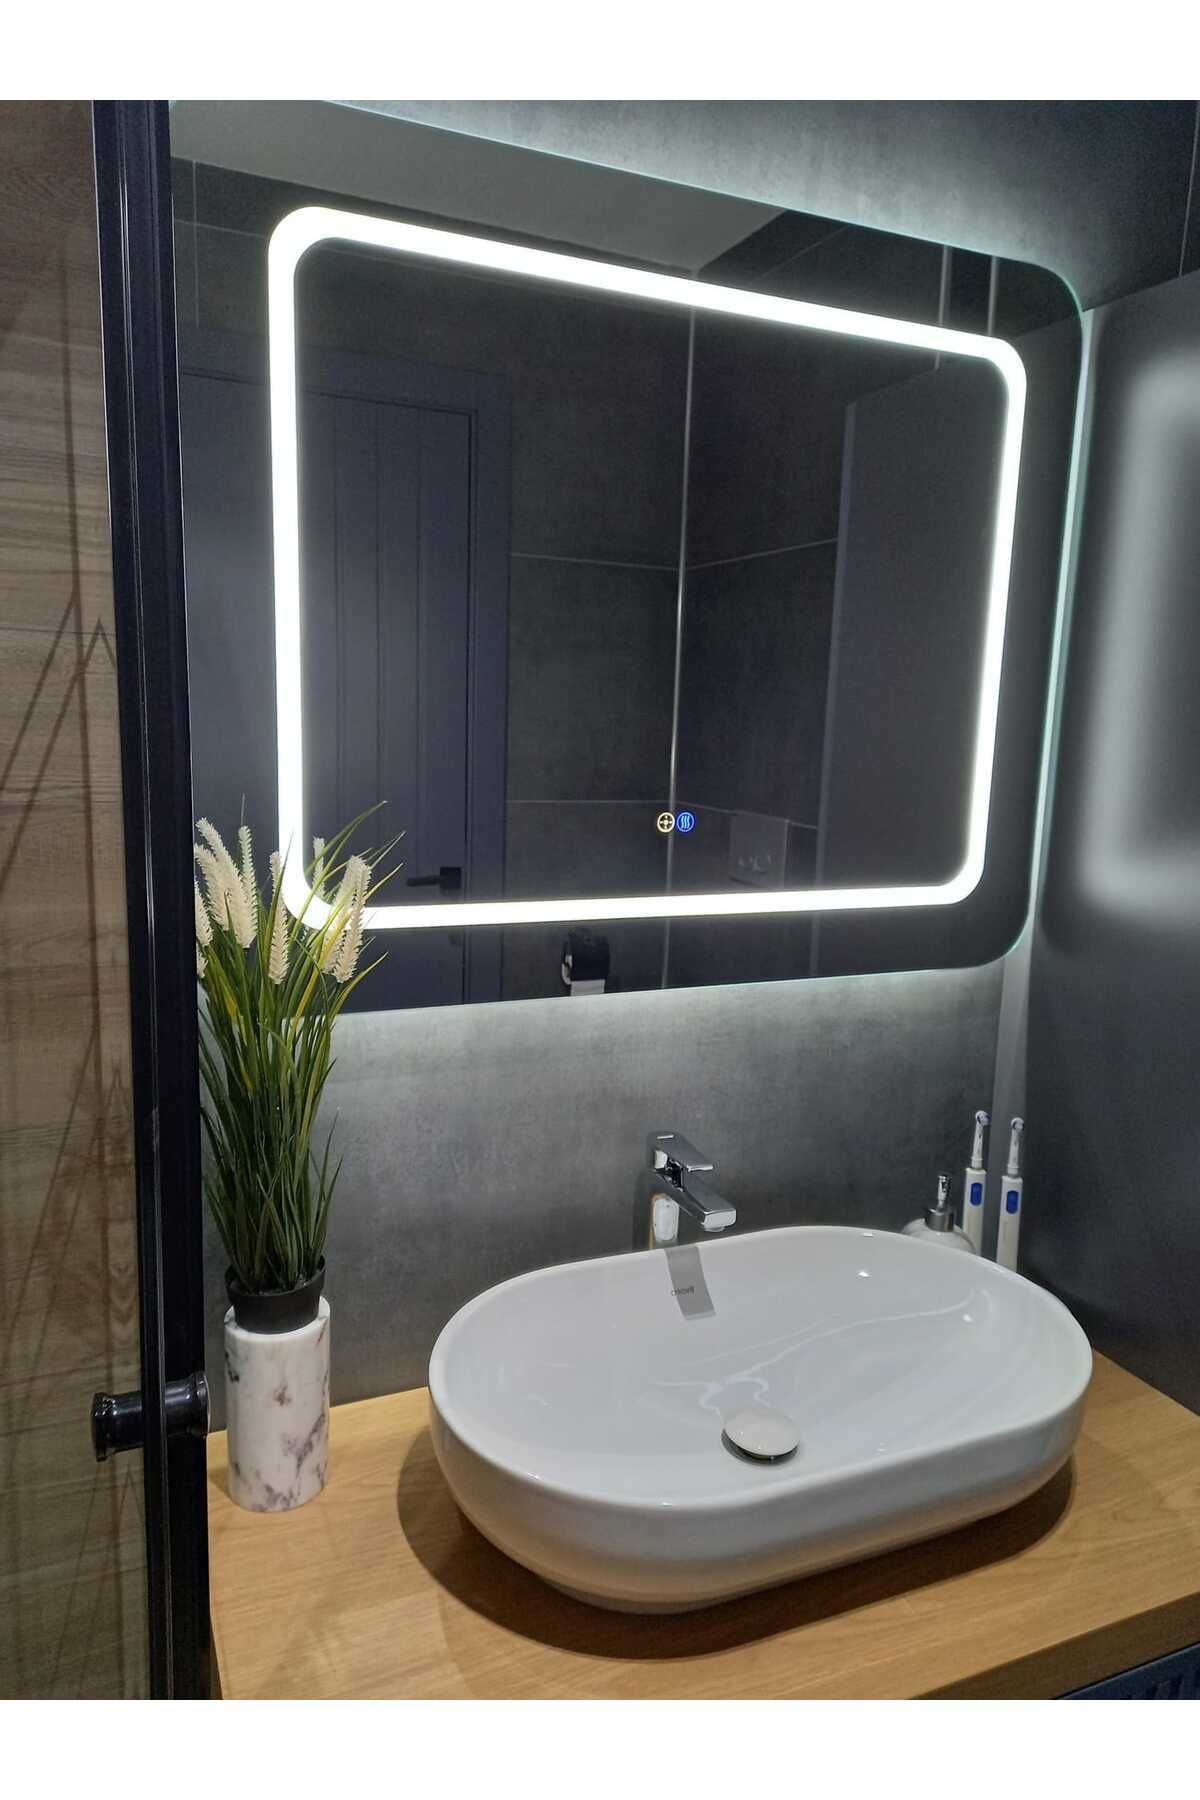 BUGUSAN Bluetoothlu Banyo Aynası Buğulanmayan Ayna 80x100